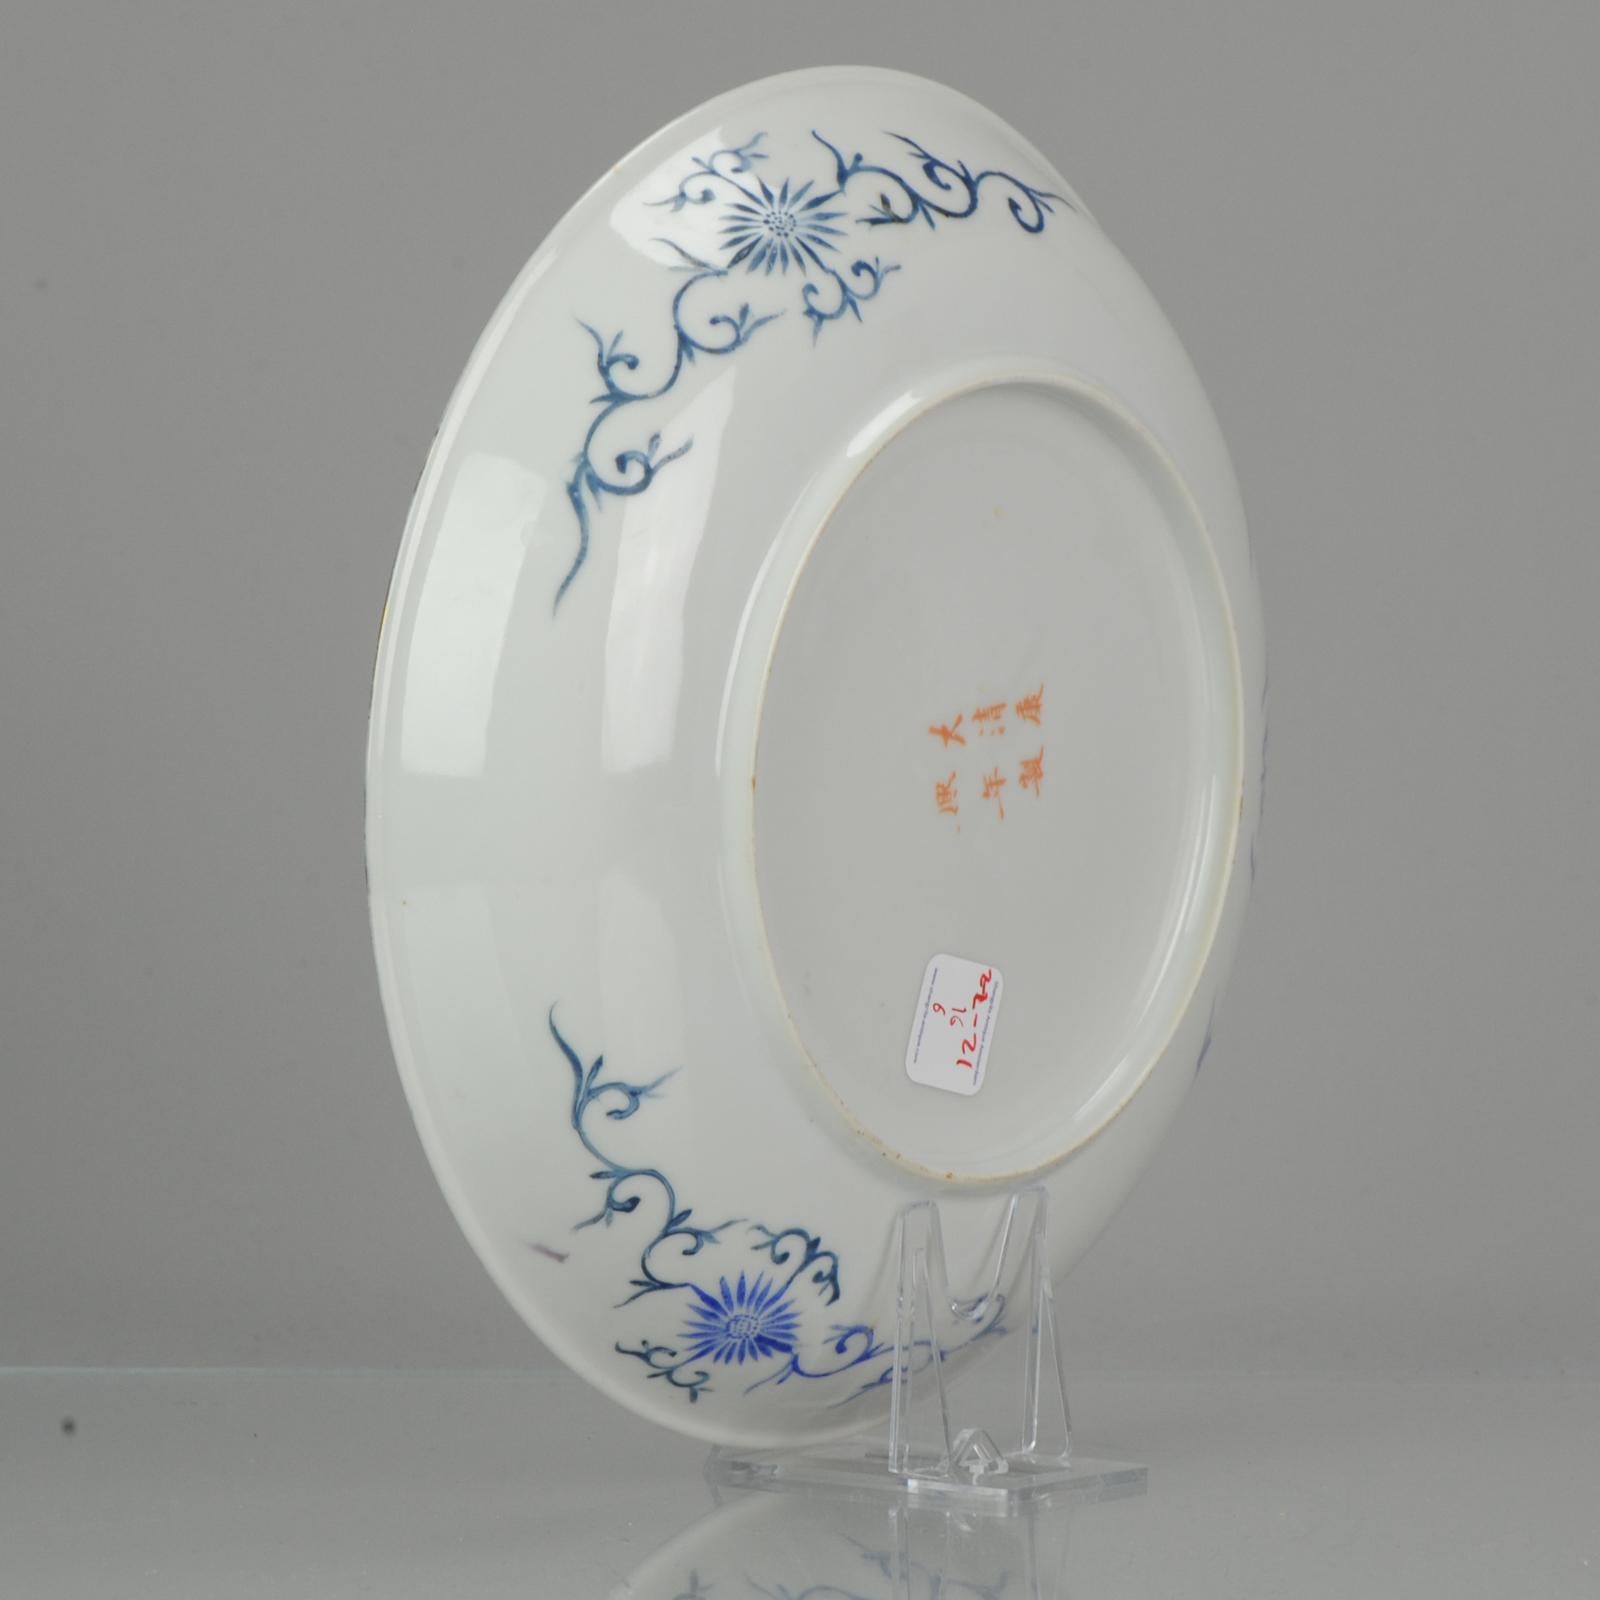 19th Century Antique Kangxi Marked Fencai Plate Chinese Porcelain China Bats FLowers